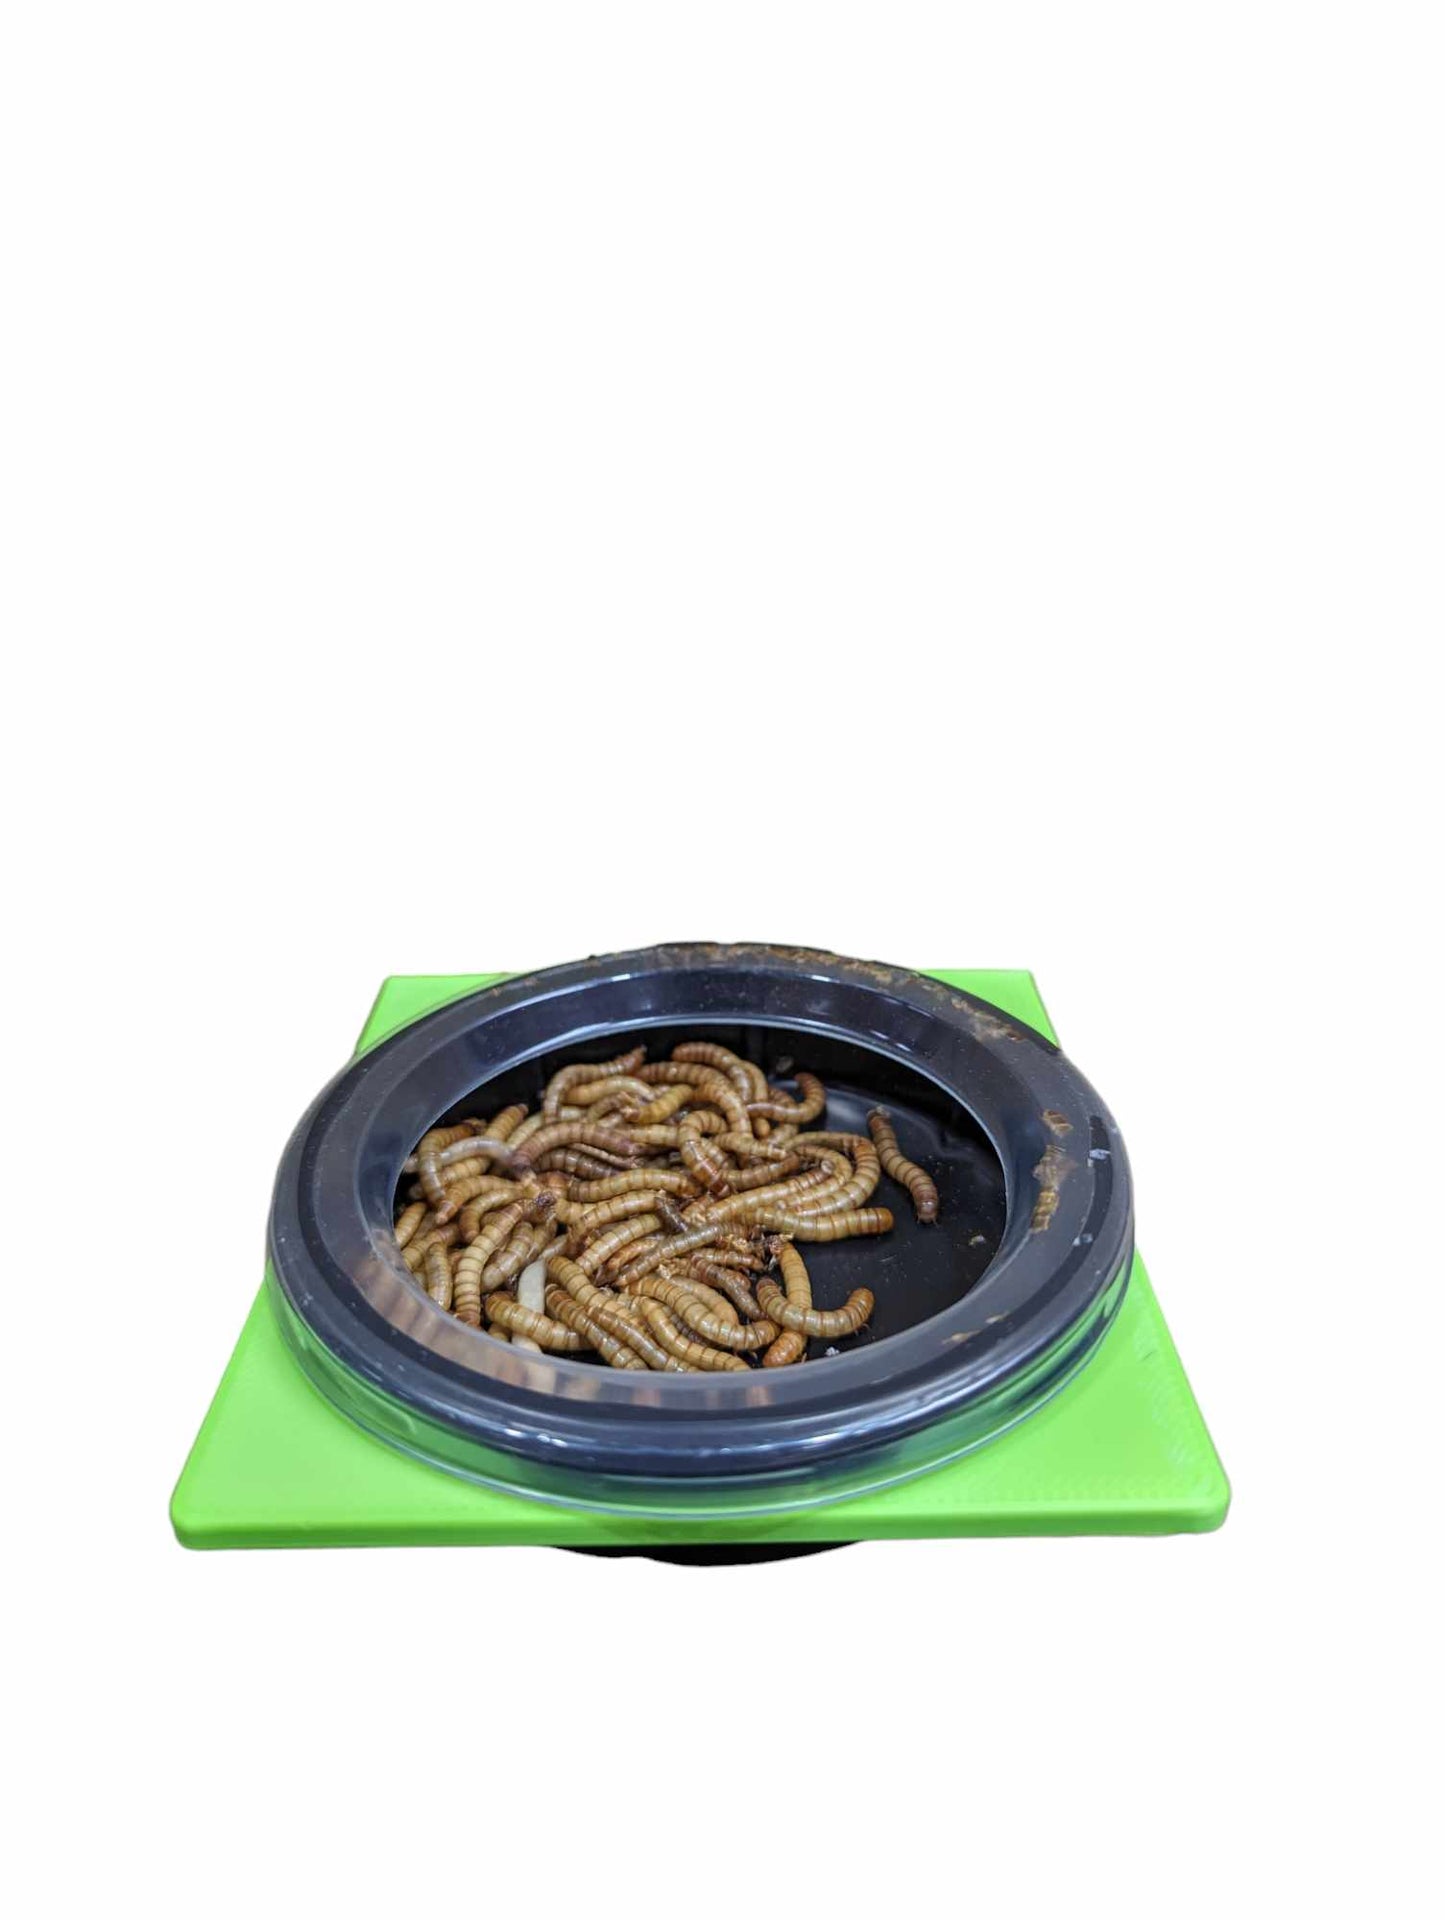 Meal Worm Dish Ledge